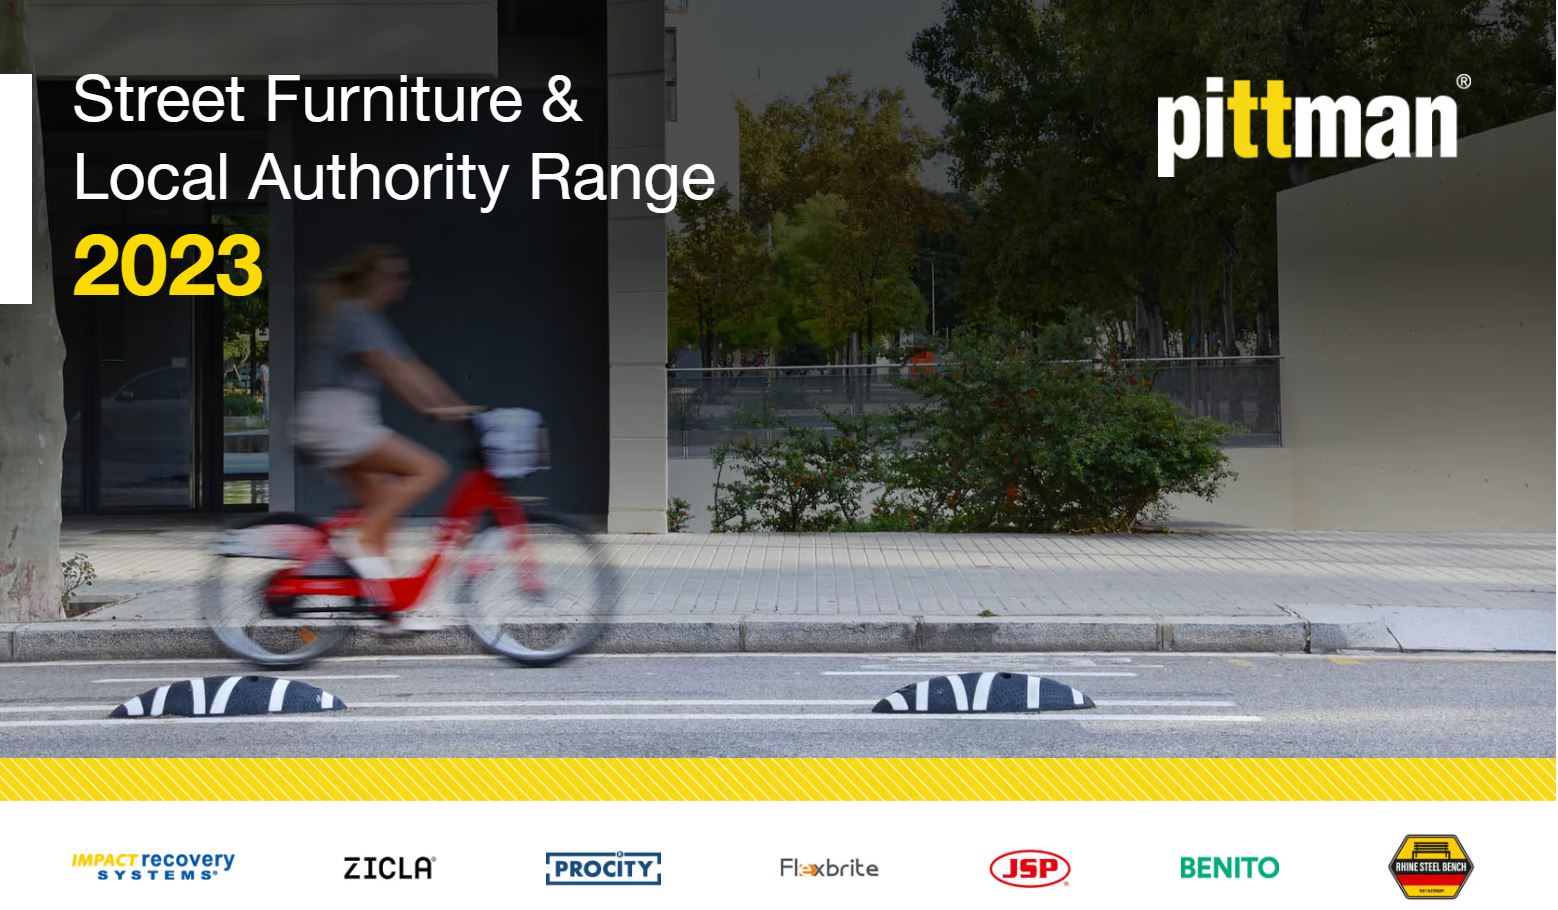 The Pittman® Street Furniture and Local Authority Range 2023